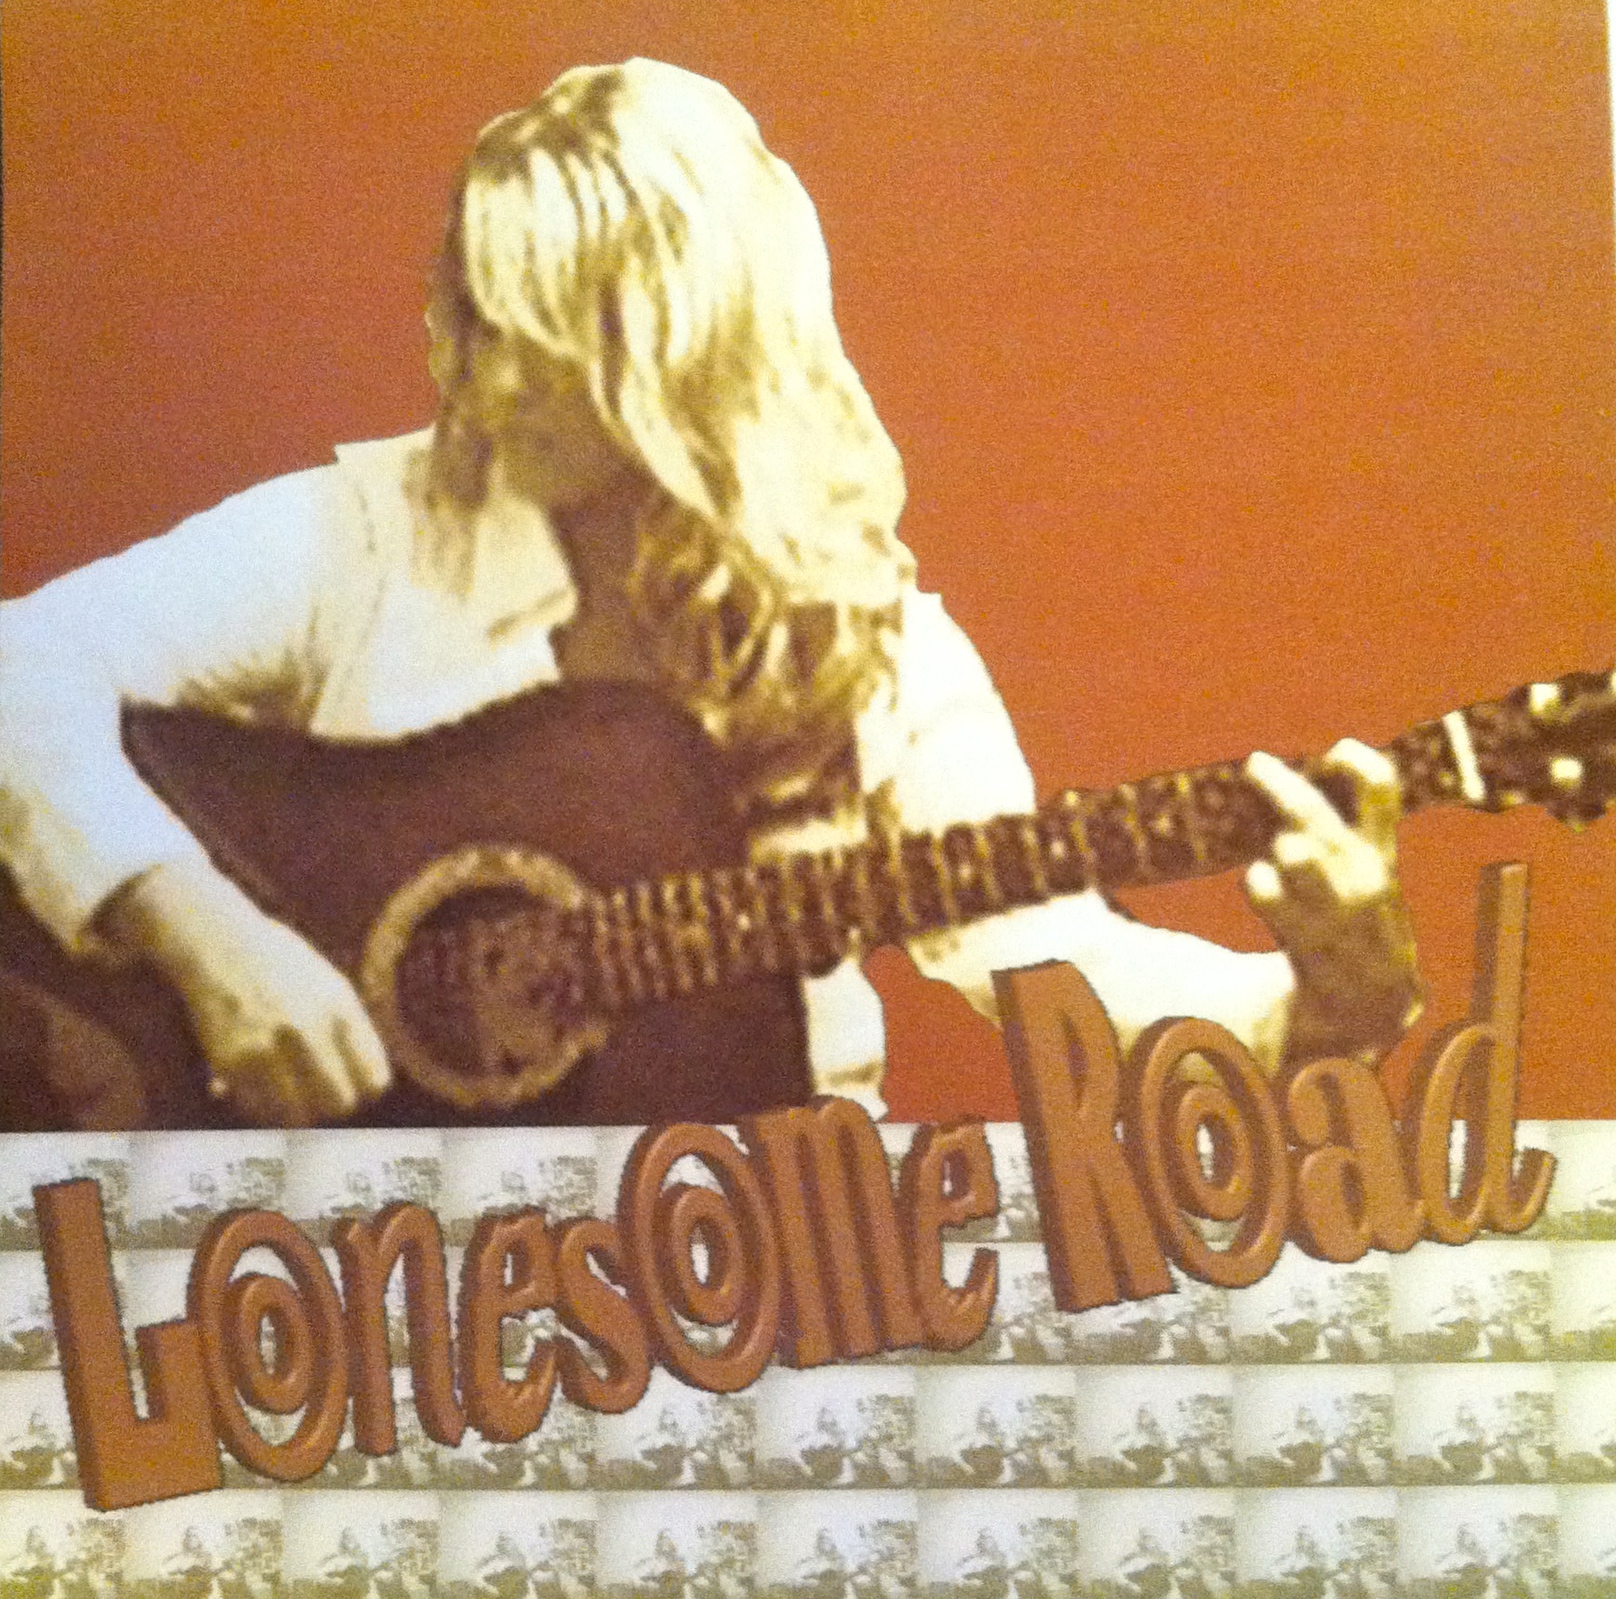 2005 Covers Album: Lonesome Road